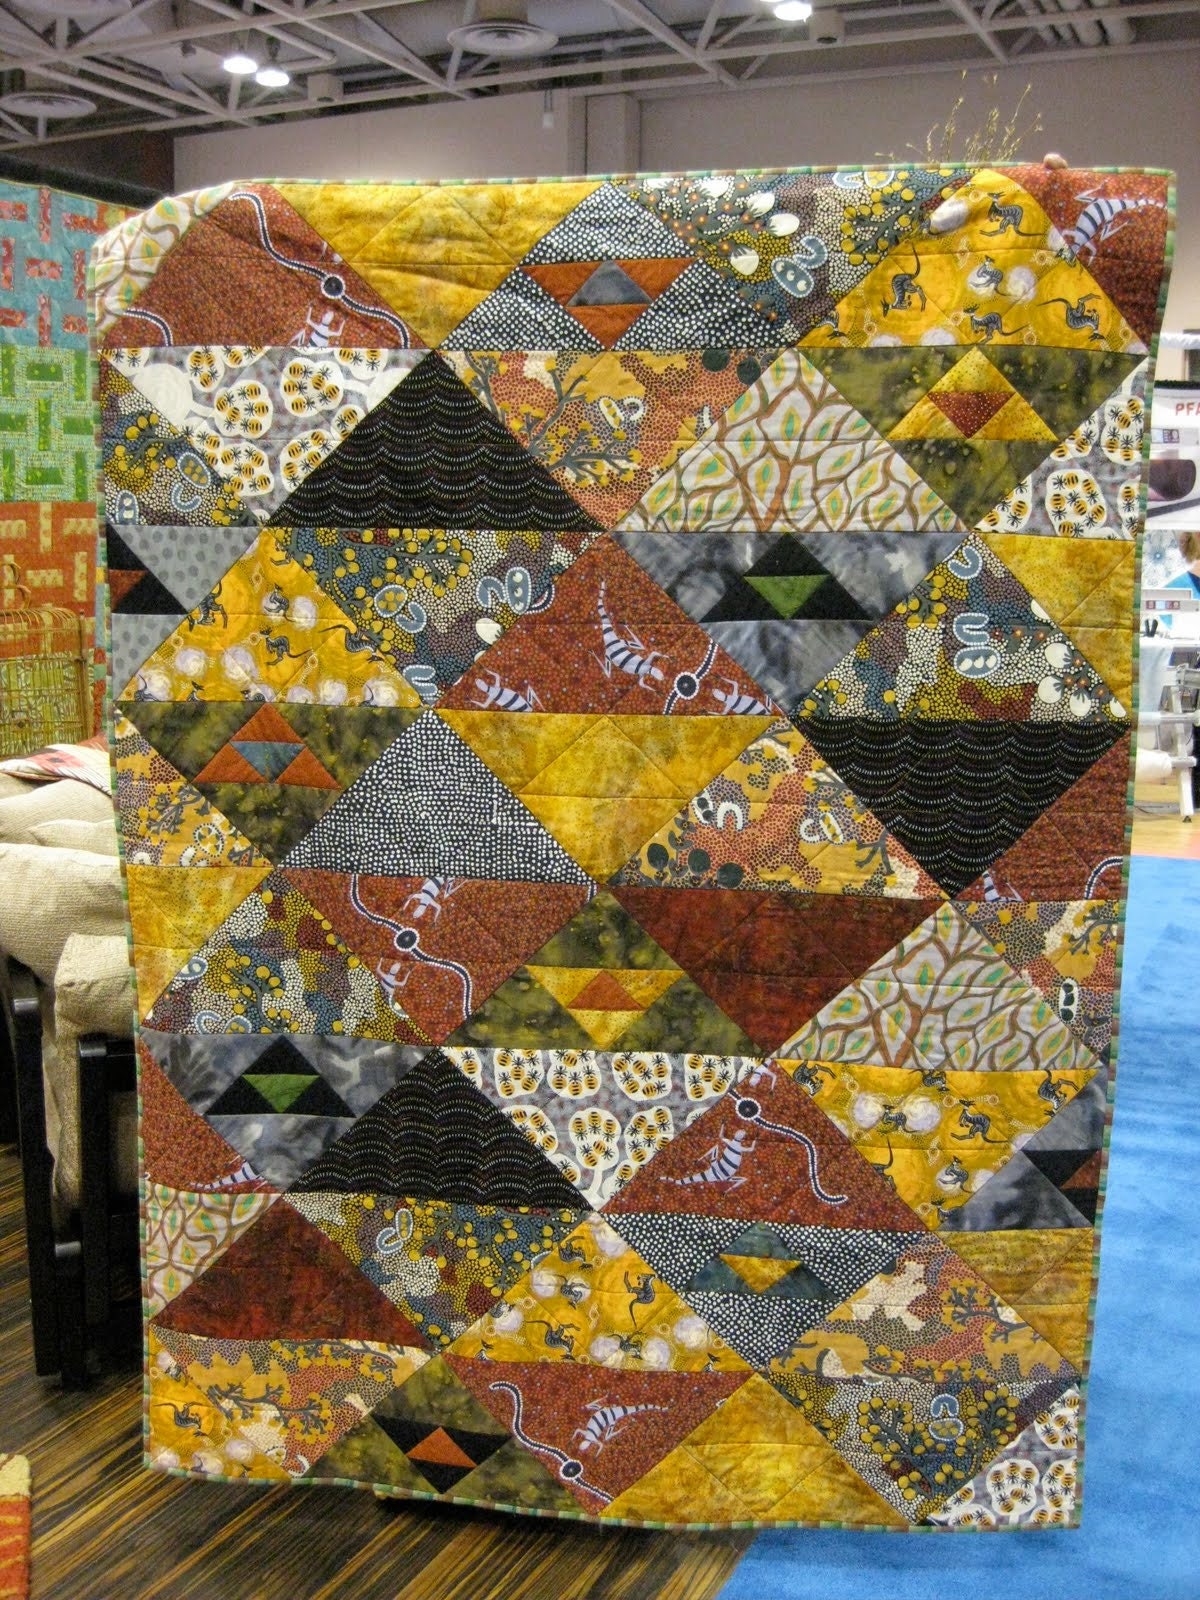 Yuendumu Bush Tomato Ecru, Australian Fabric, Aboriginal Fabric, Ethnic Fabric, Quilt Fabric, Large Print Fabric, Cotton Fabric By The Yard